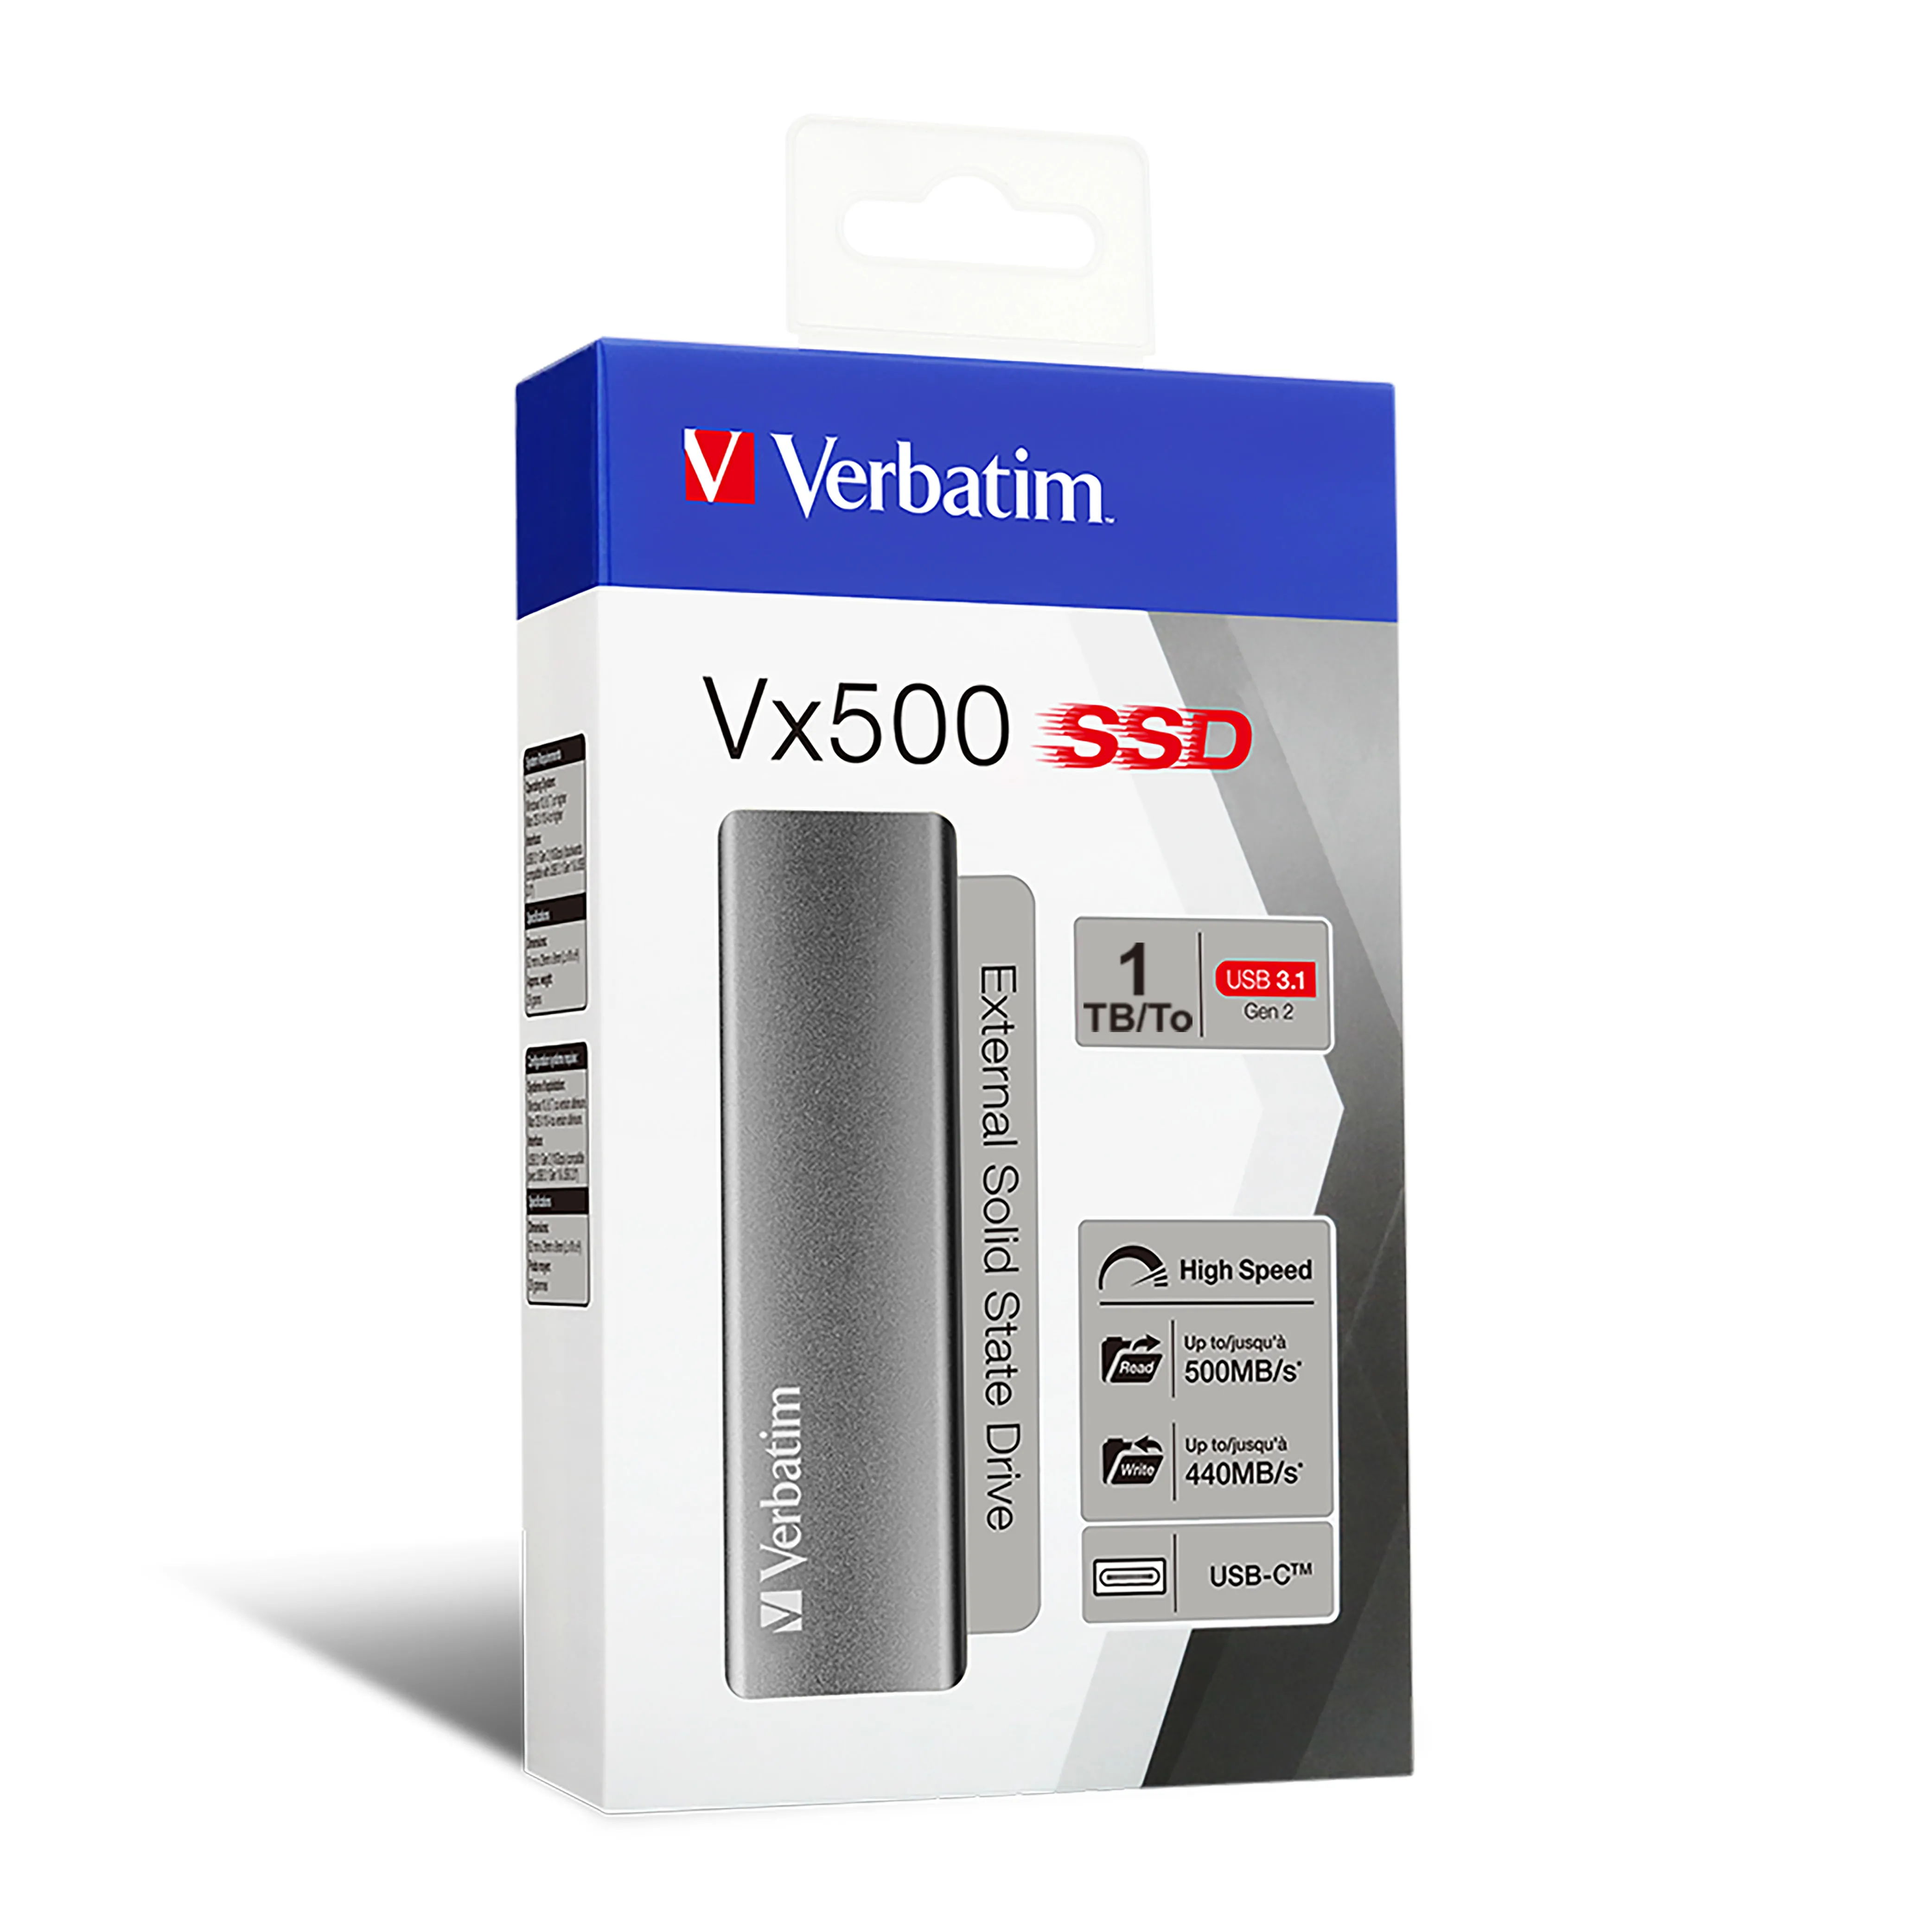 Vente Verbatim Vx500 Verbatim au meilleur prix - visuel 2